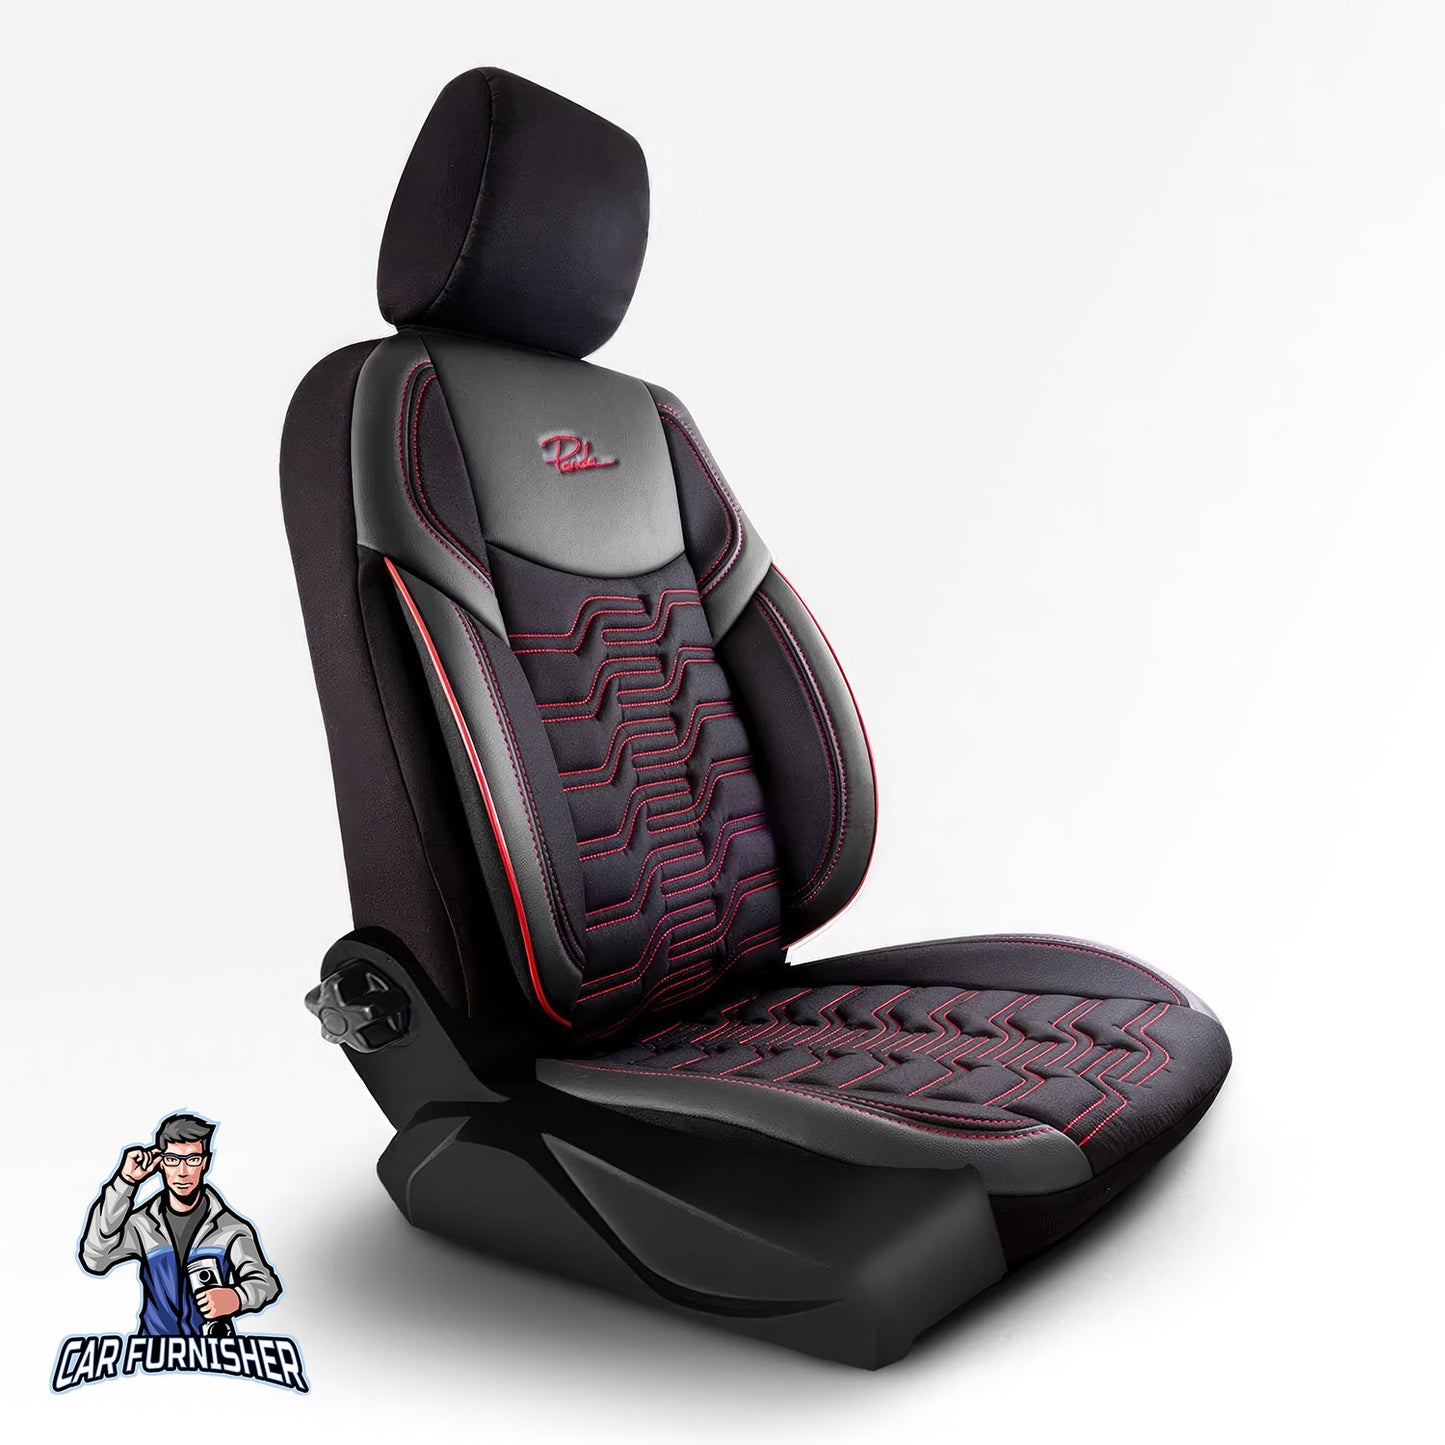 Car Seat Cover Set - Berlin Design Dark Red 5 Seats + Headrests (Full Set) Leather & Jacquard Fabric